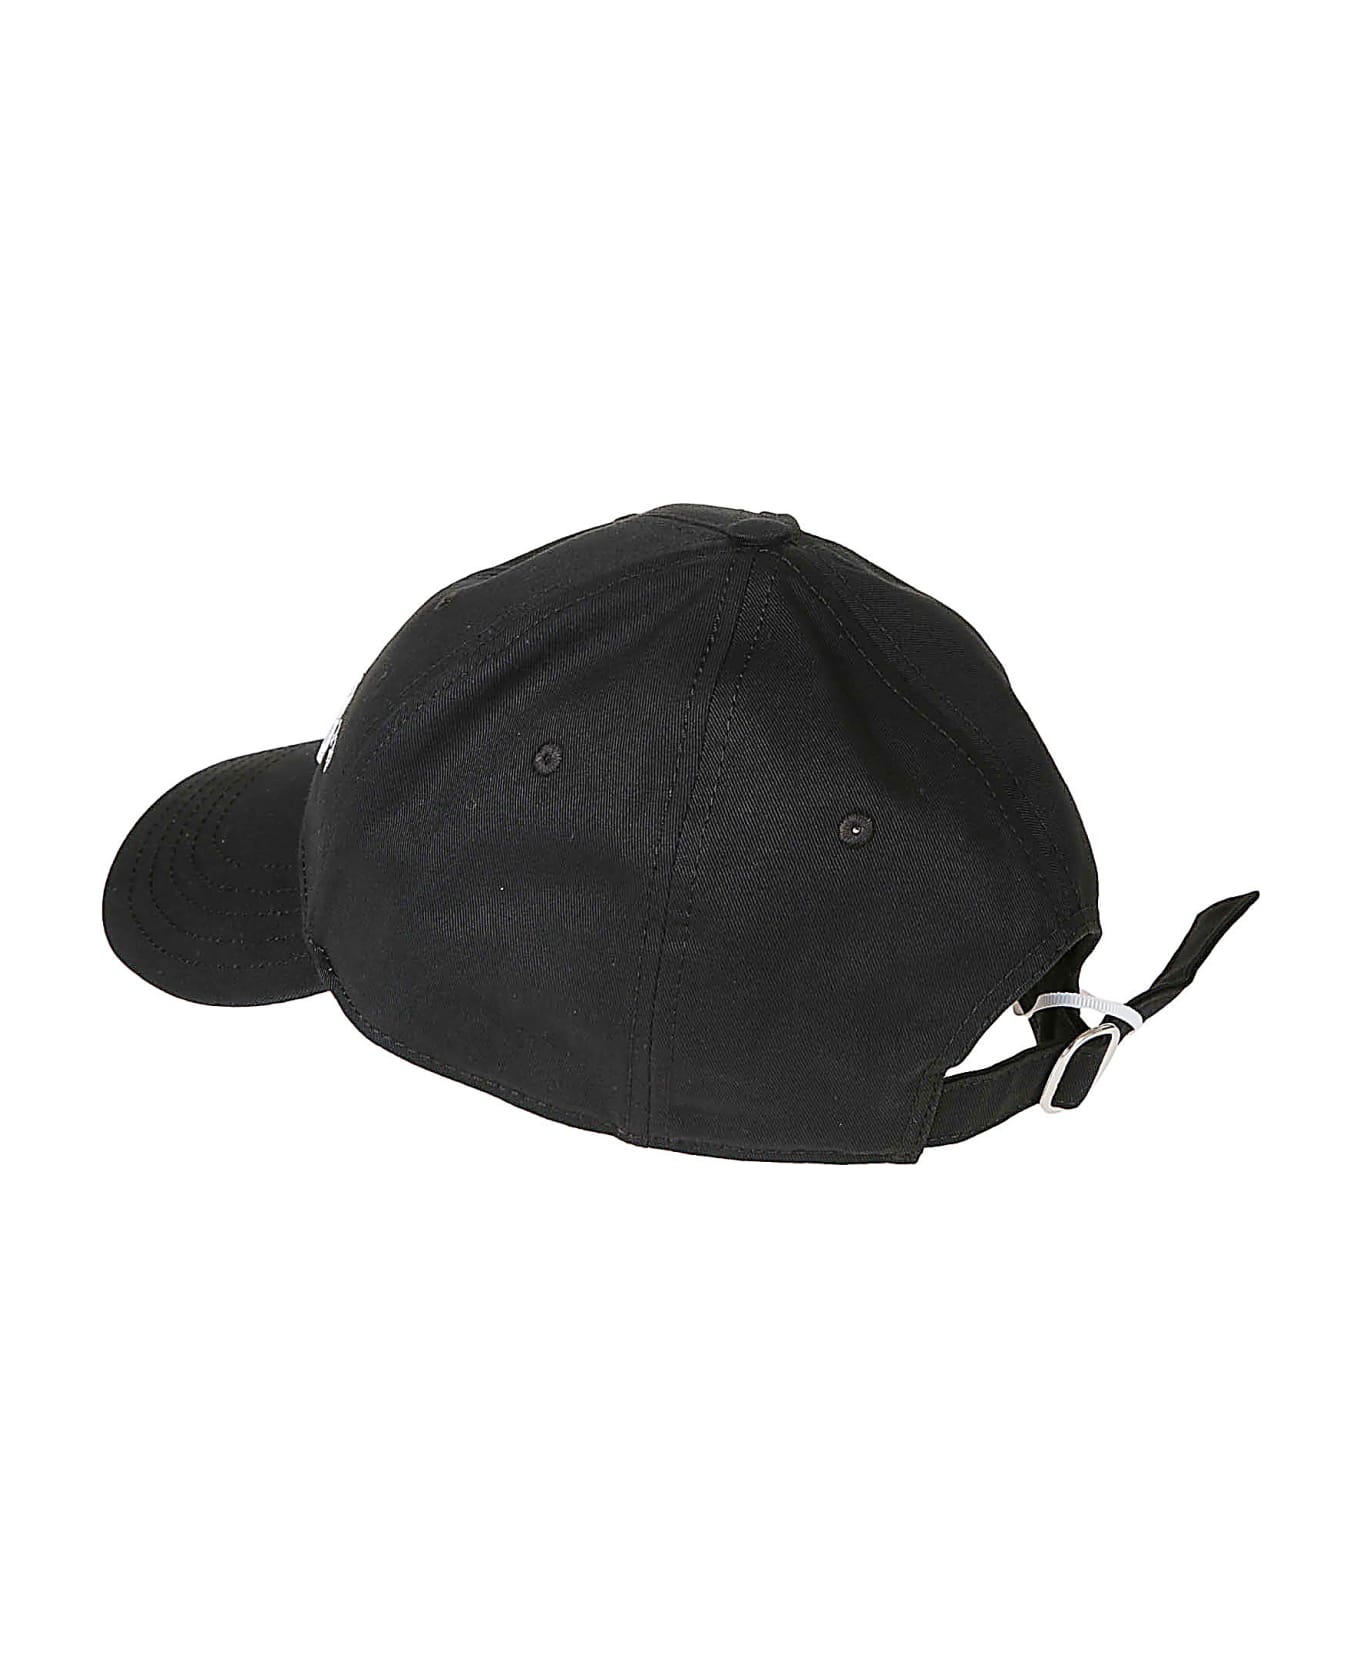 Off-White Bookish Dril Baseball Cap - Black/White 帽子